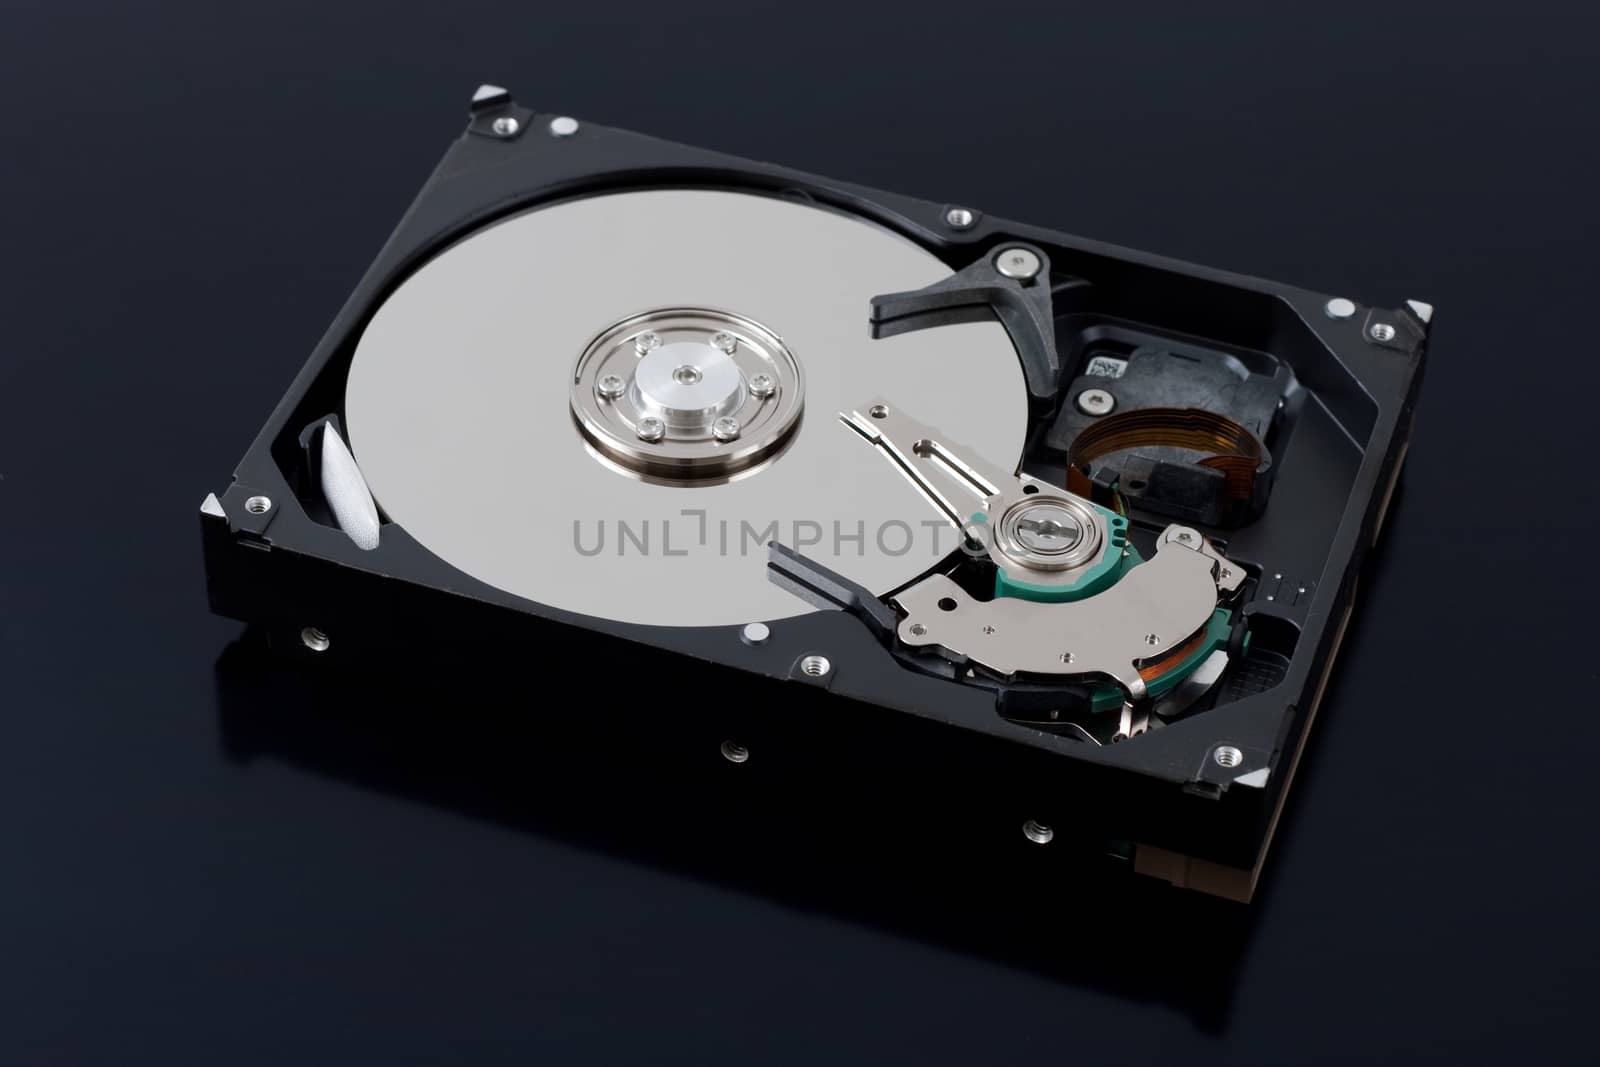 dissasembled hard drive upper view on black background